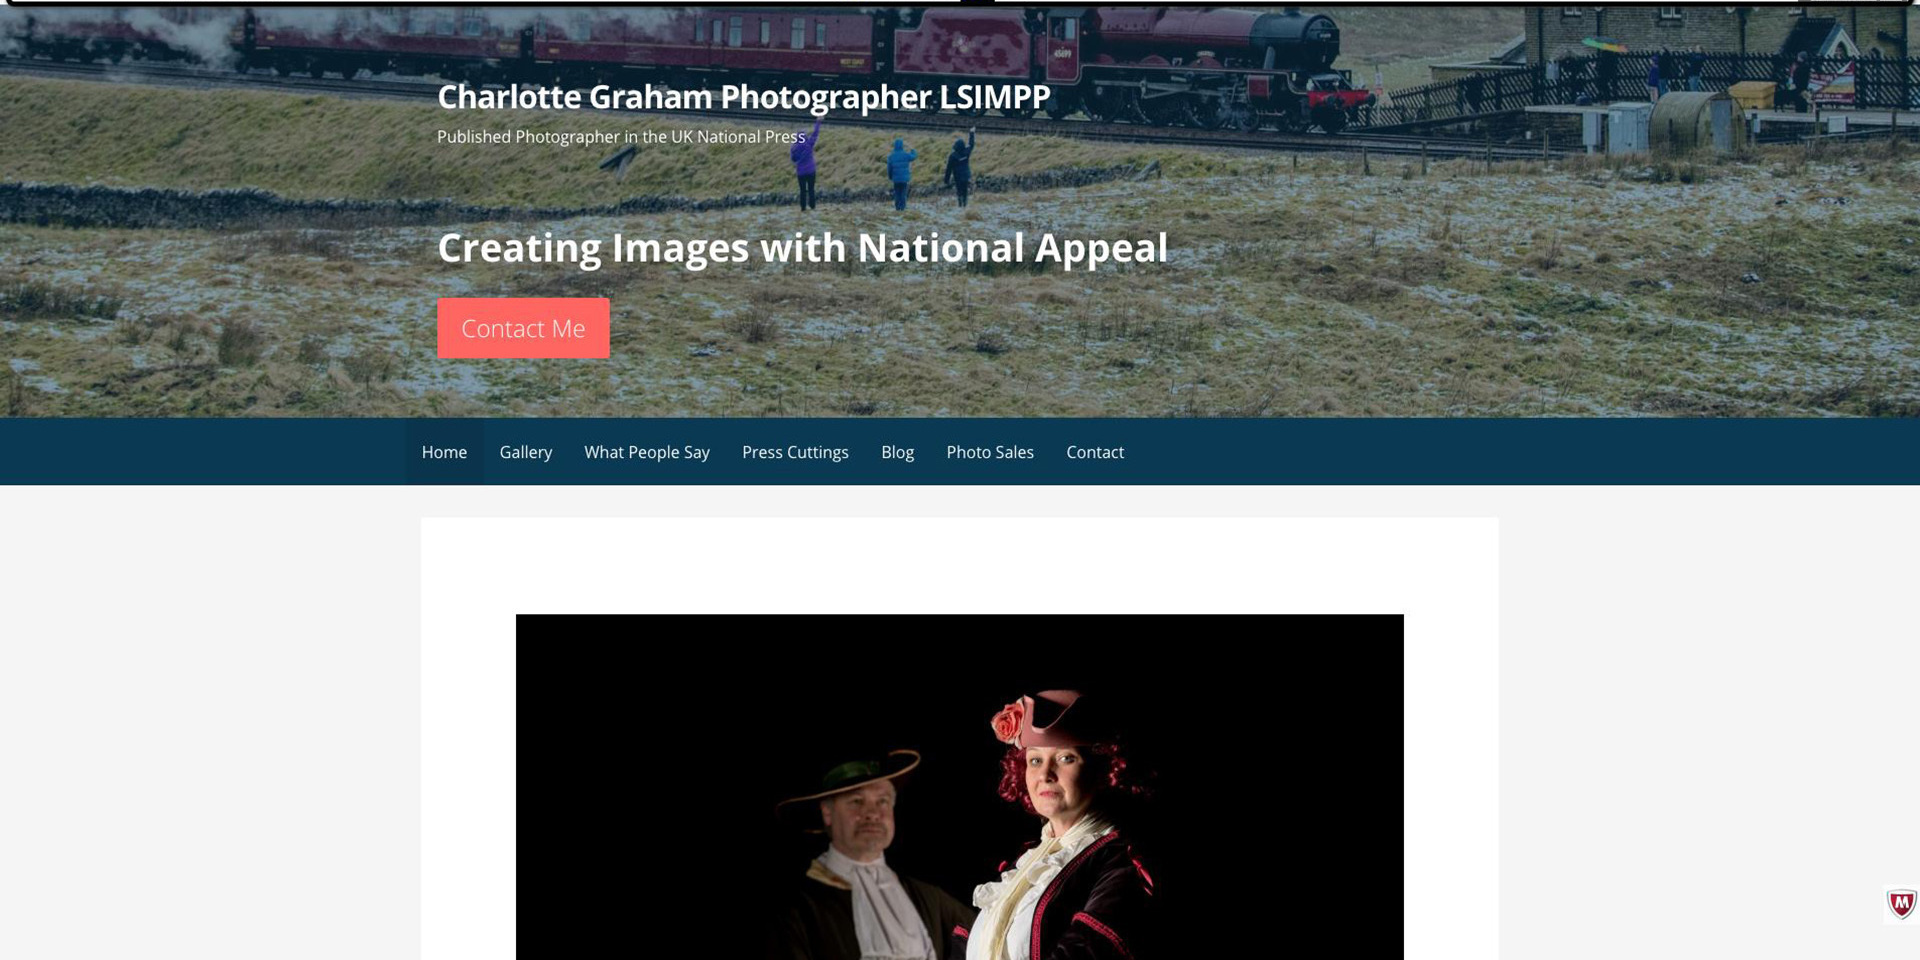 The previous Charlotte Graham website, displayed on desktop